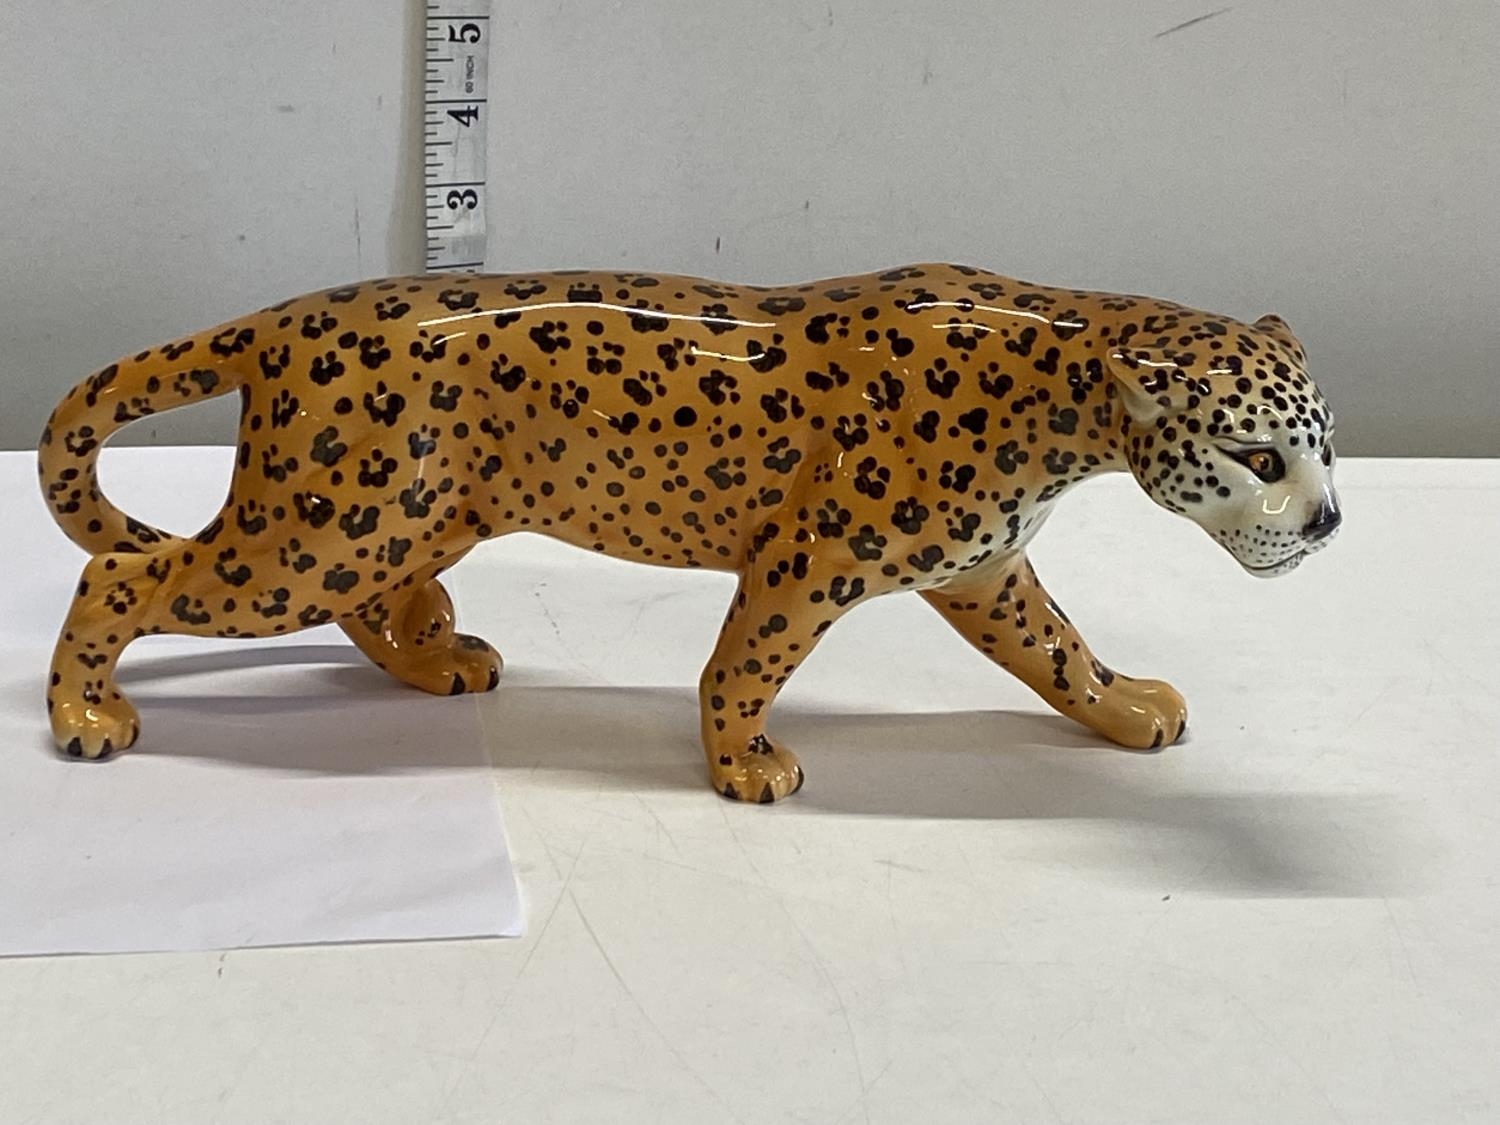 A large Beswick cheetah figurine